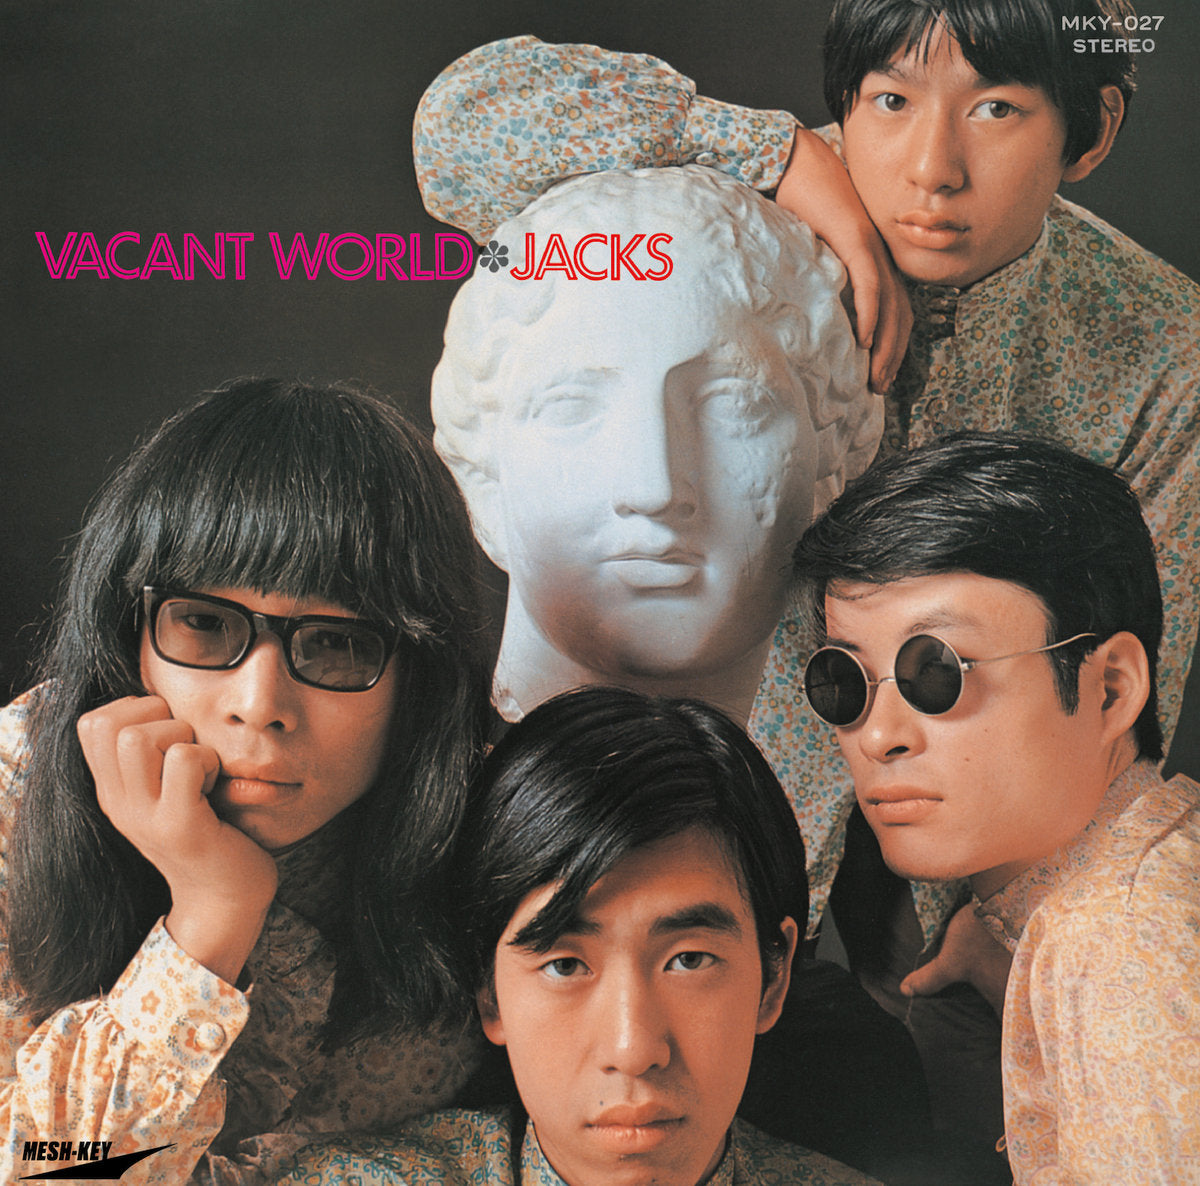 JACKS - "VACANT WORLD" LP